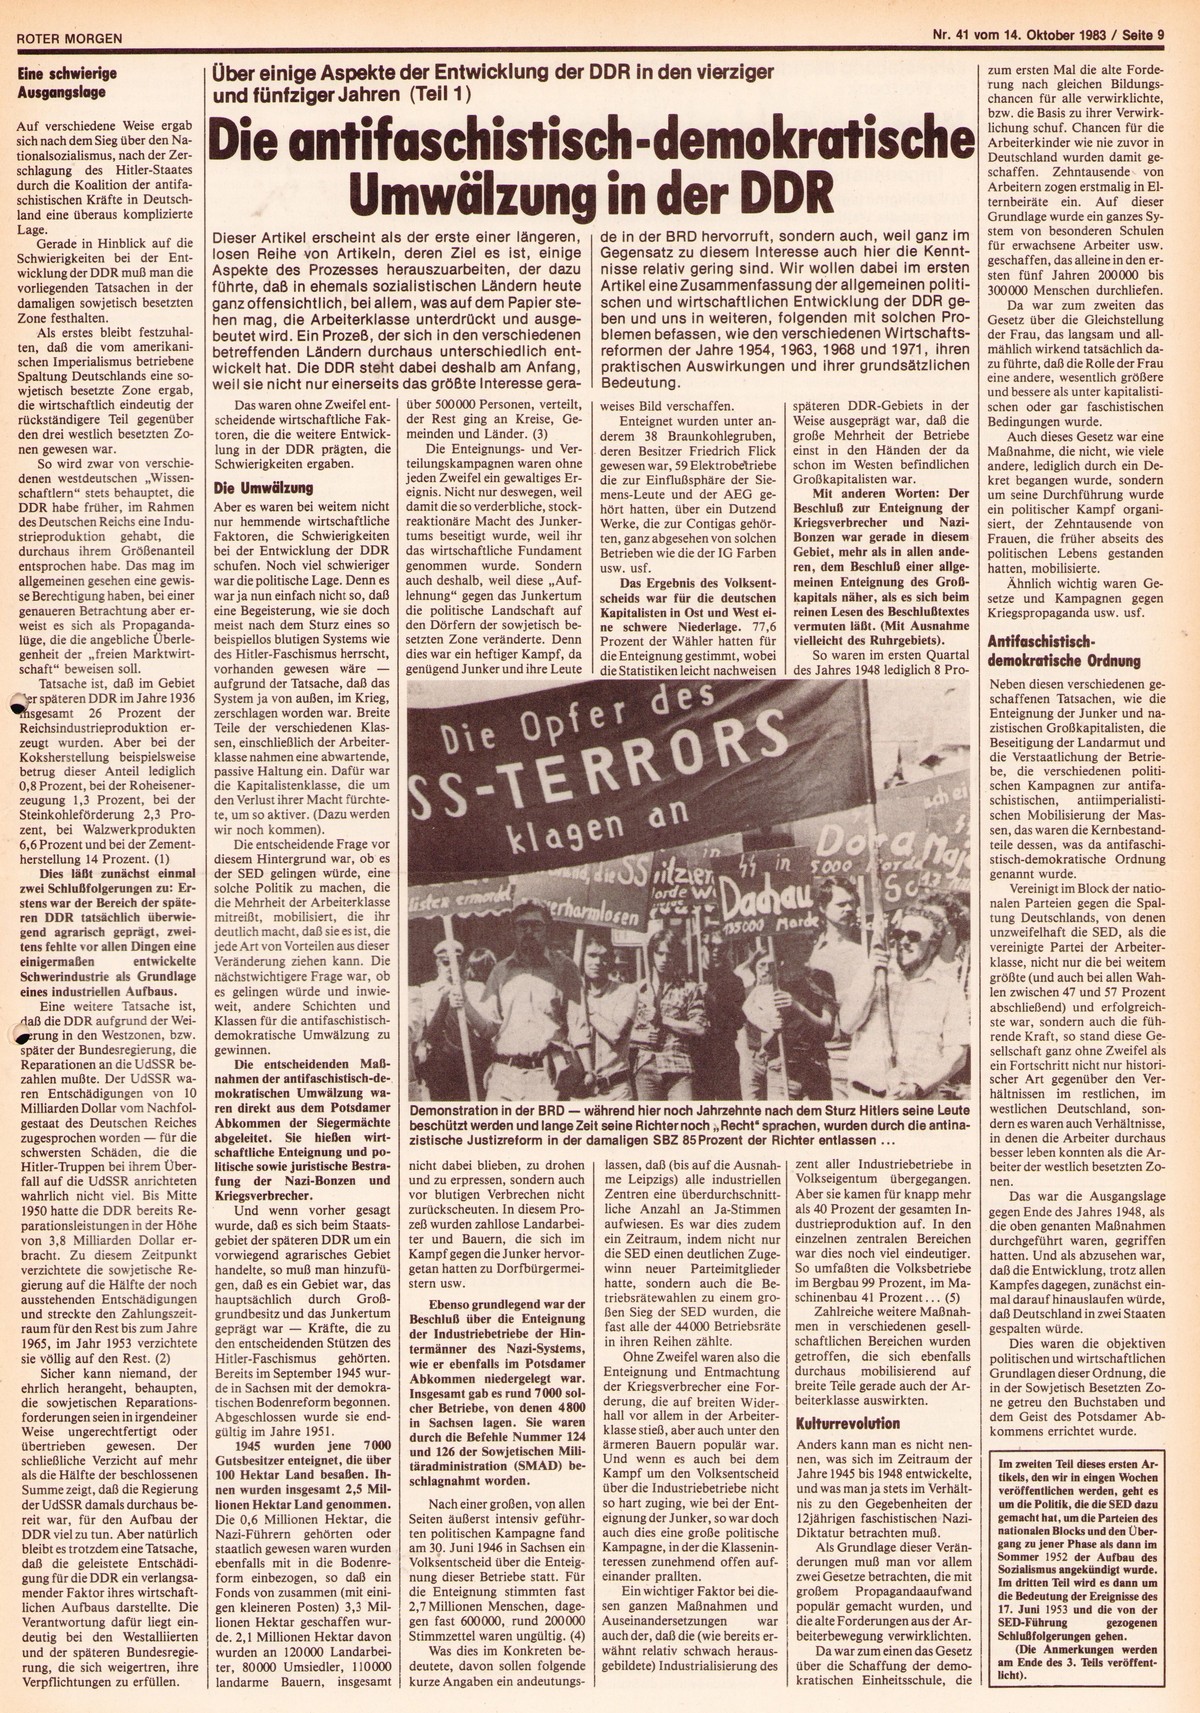 Roter Morgen, 17. Jg., 14. Oktober 1983, Nr. 41, Seite 9